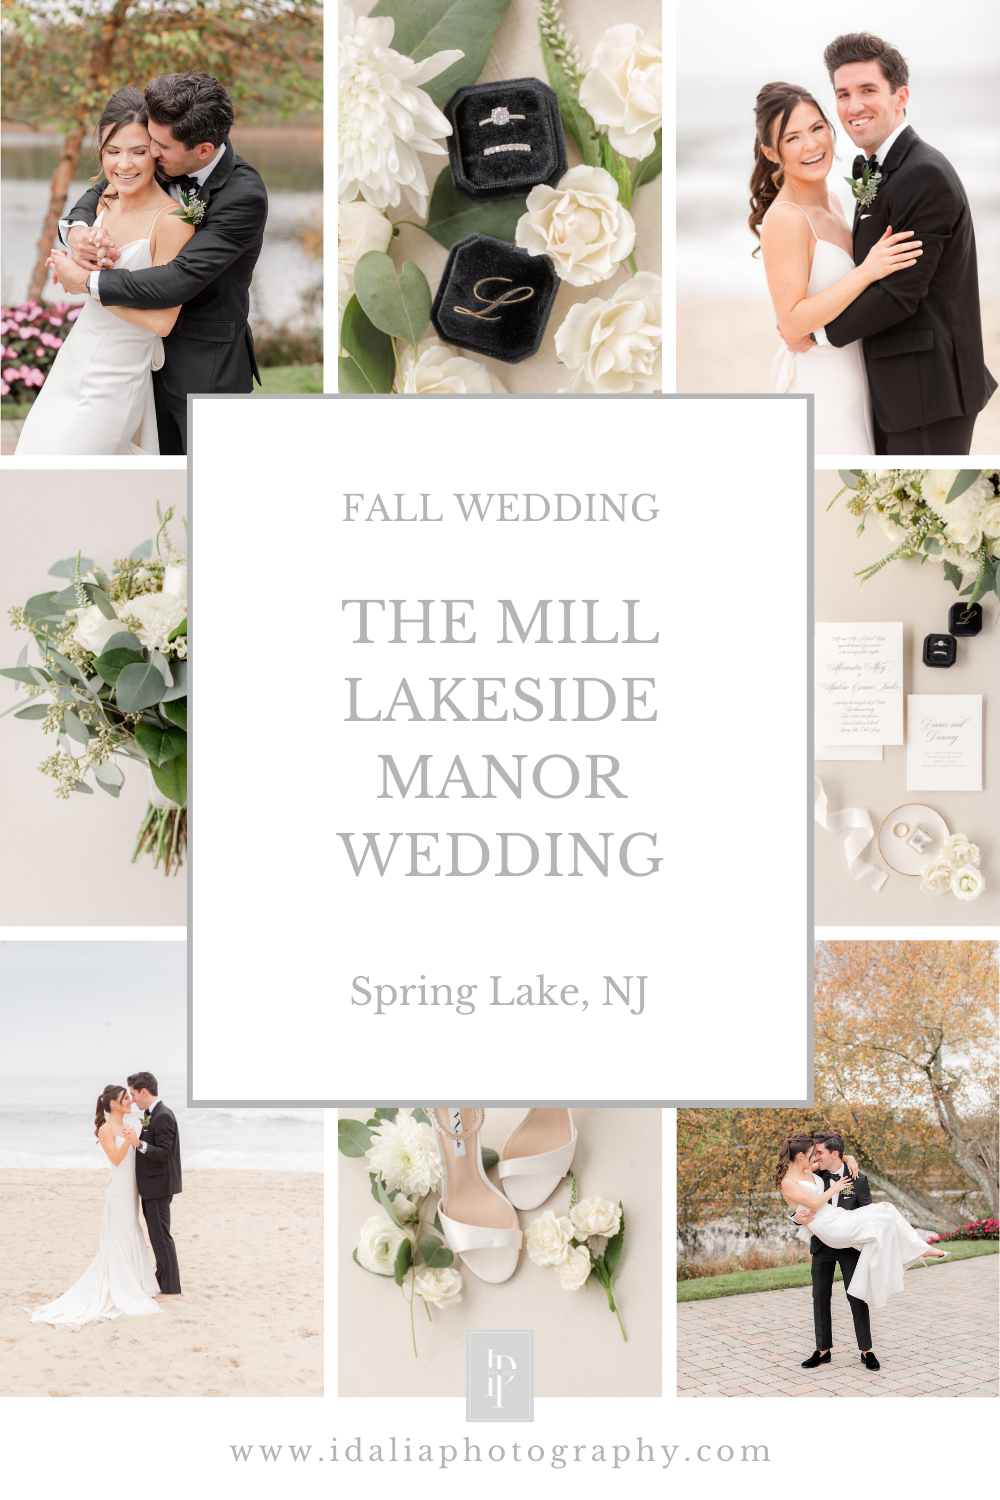 The Mill Lakeside Manor Wedding